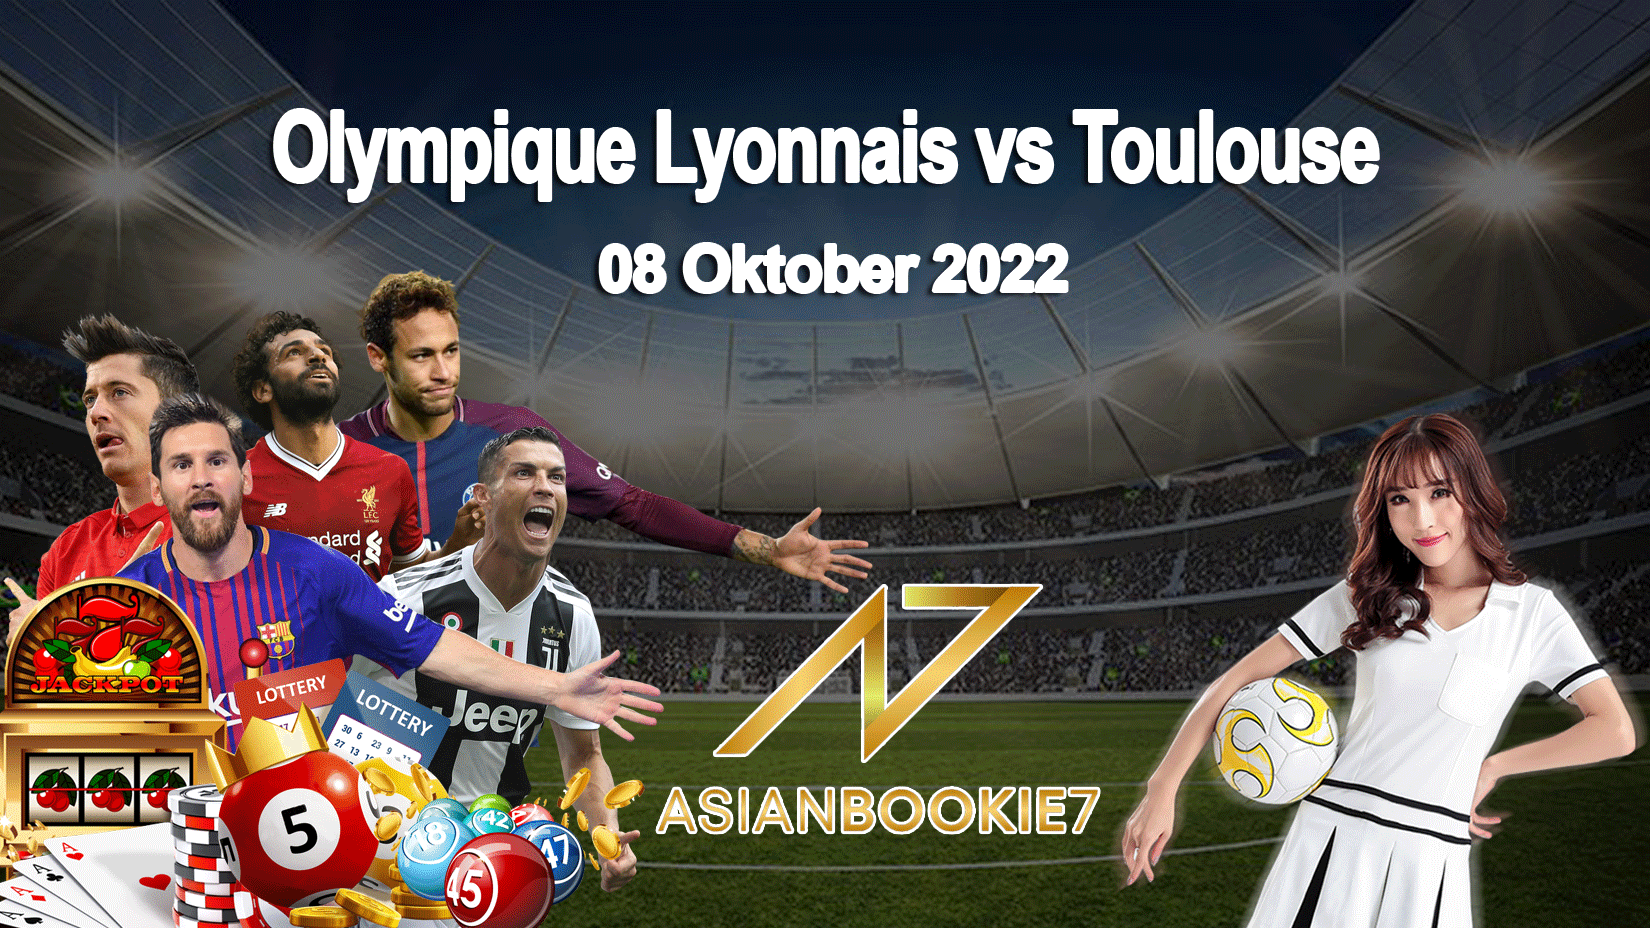 Prediksi Olympique Lyonnais vs Toulouse 08 Oktober 2022